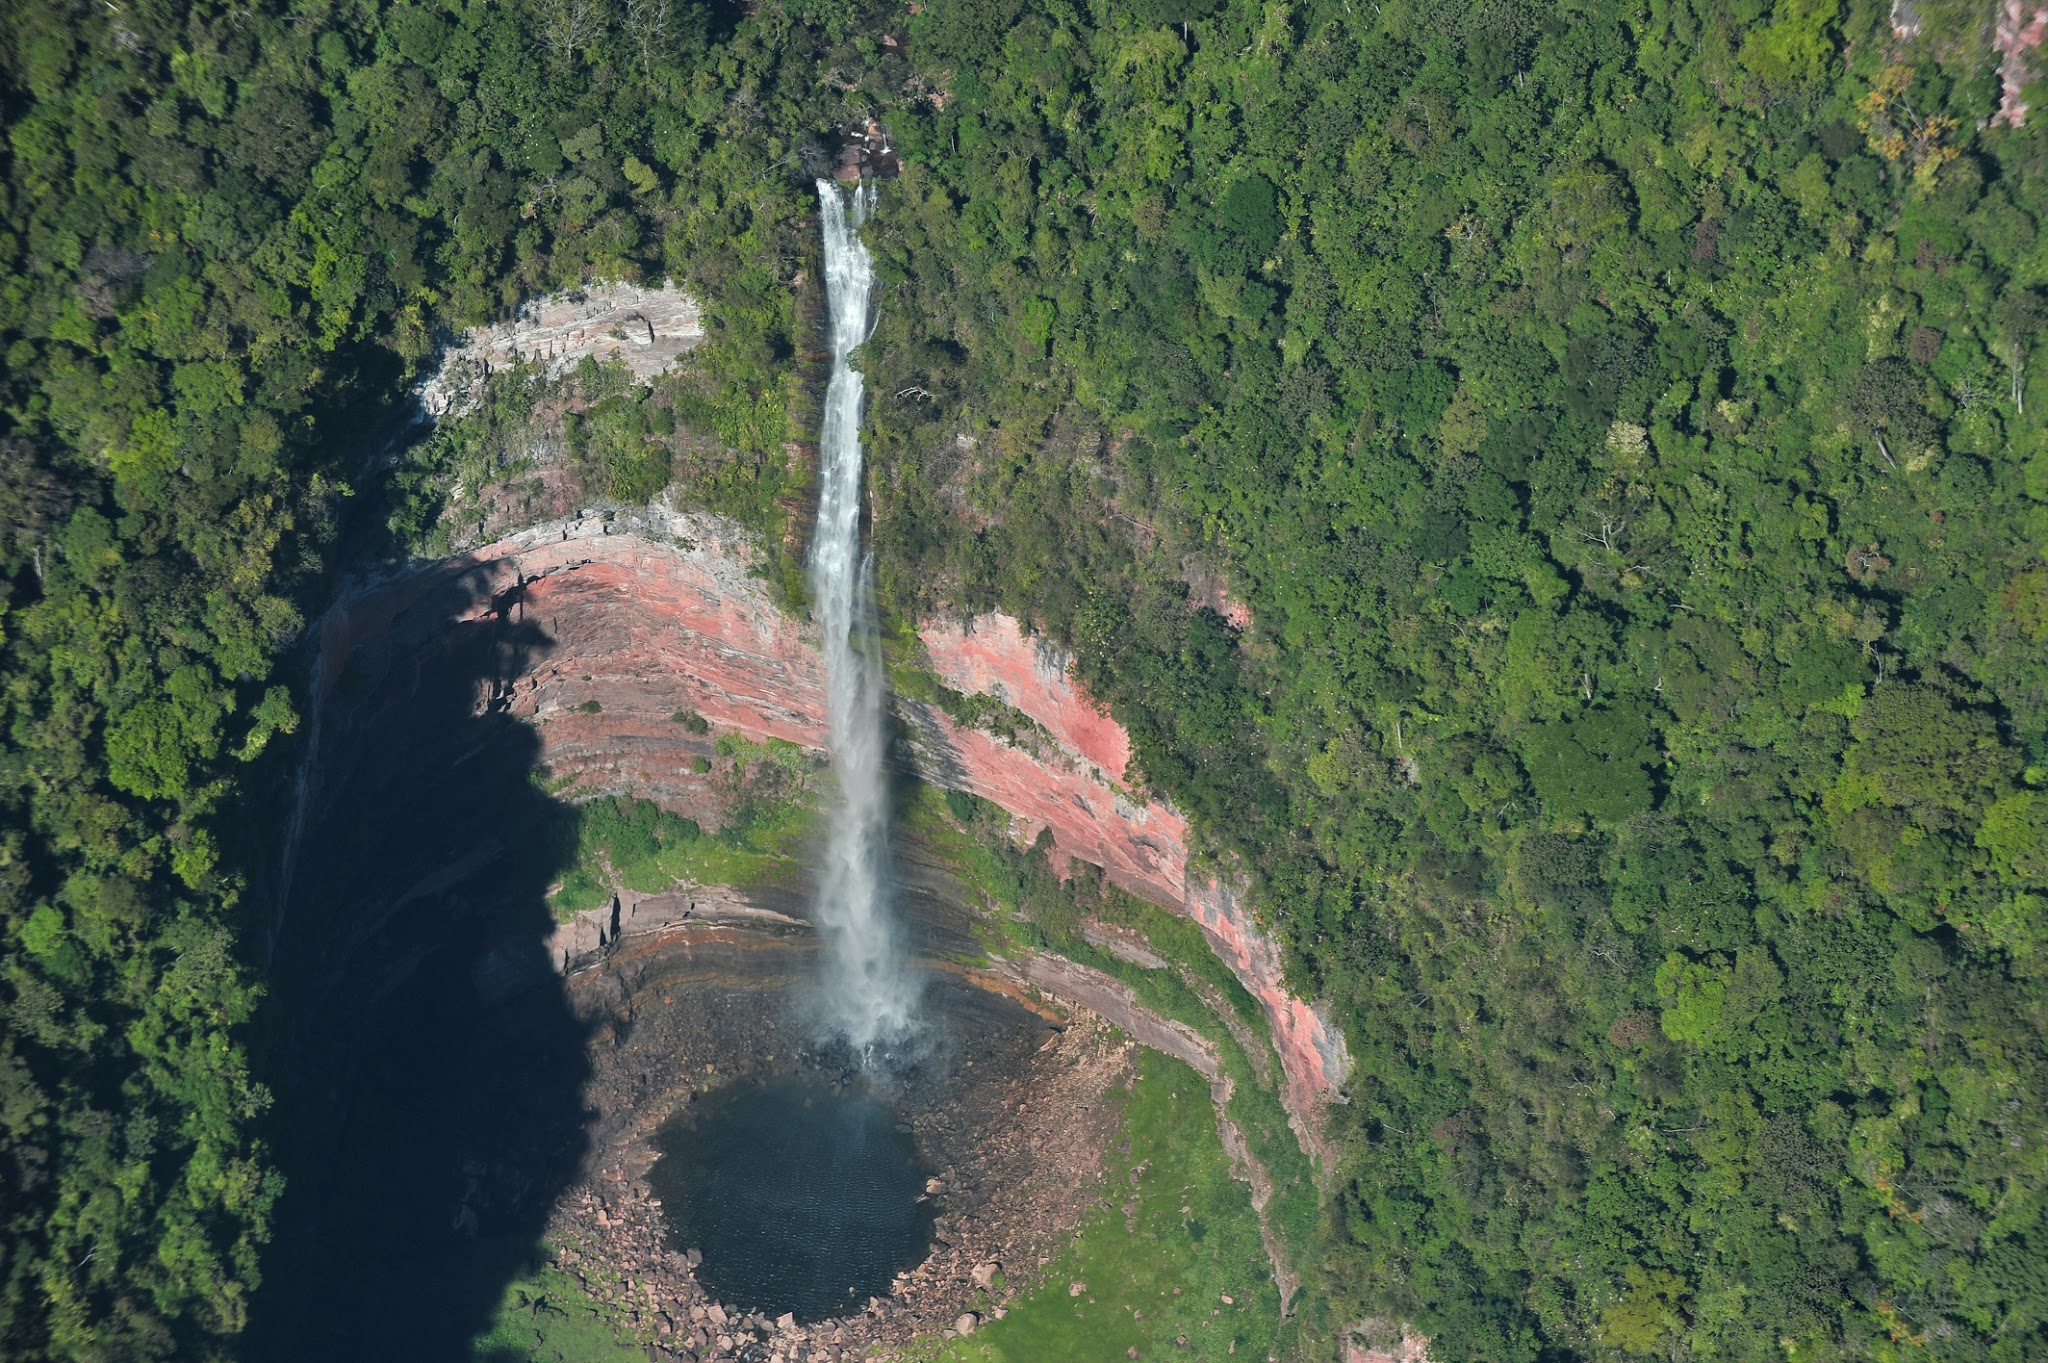 Parijaro waterfall, Peru